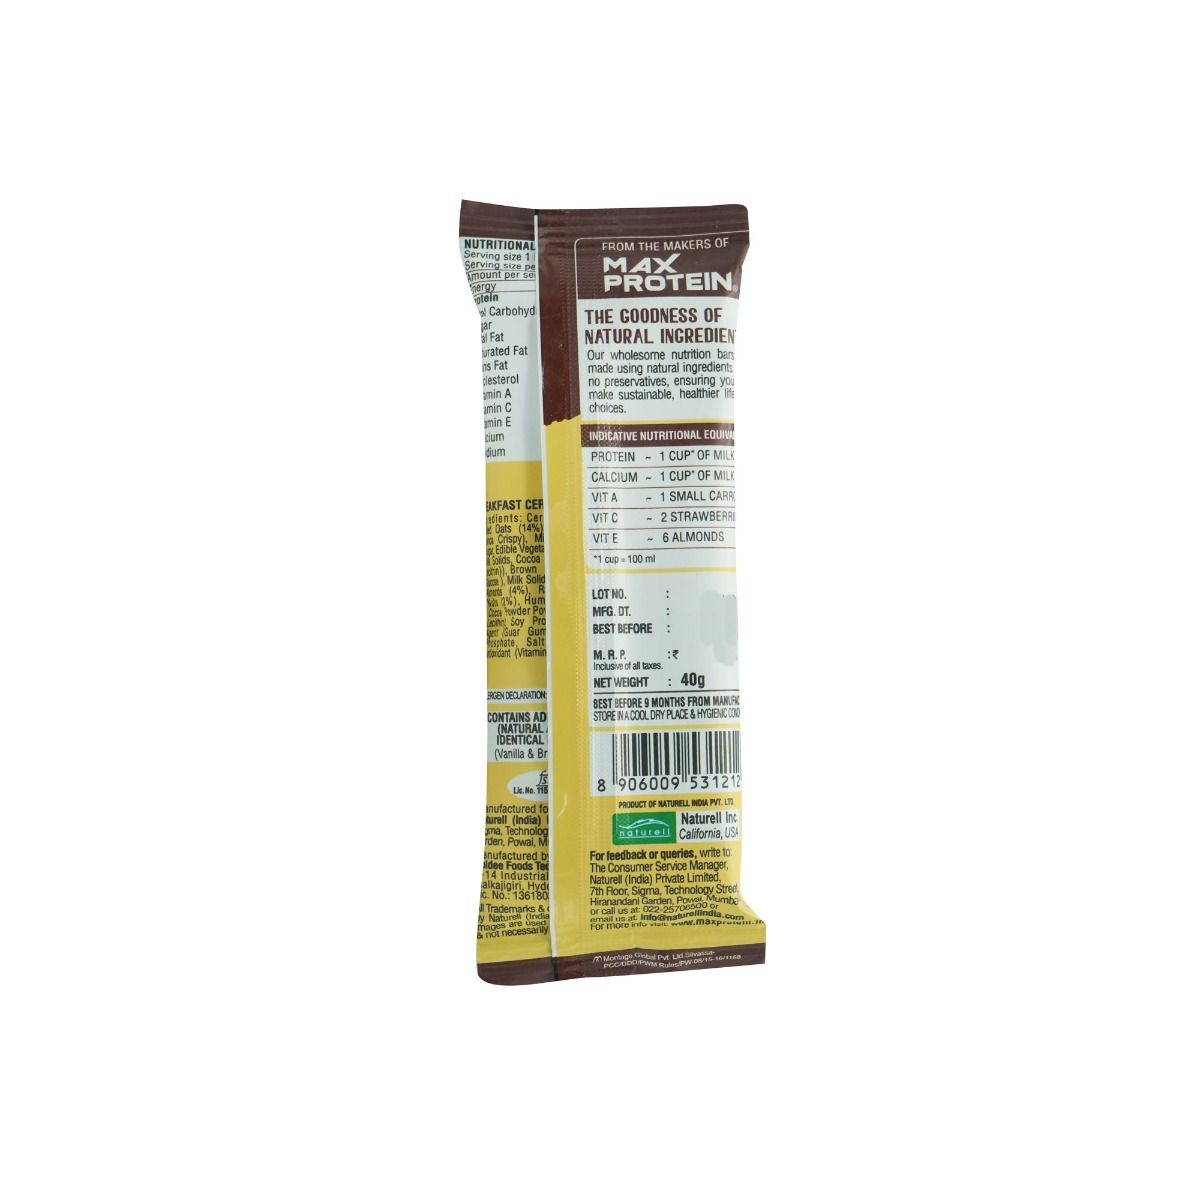 RiteBite Choco Delite Nutrition Bar, 40 gm, Pack of 1 